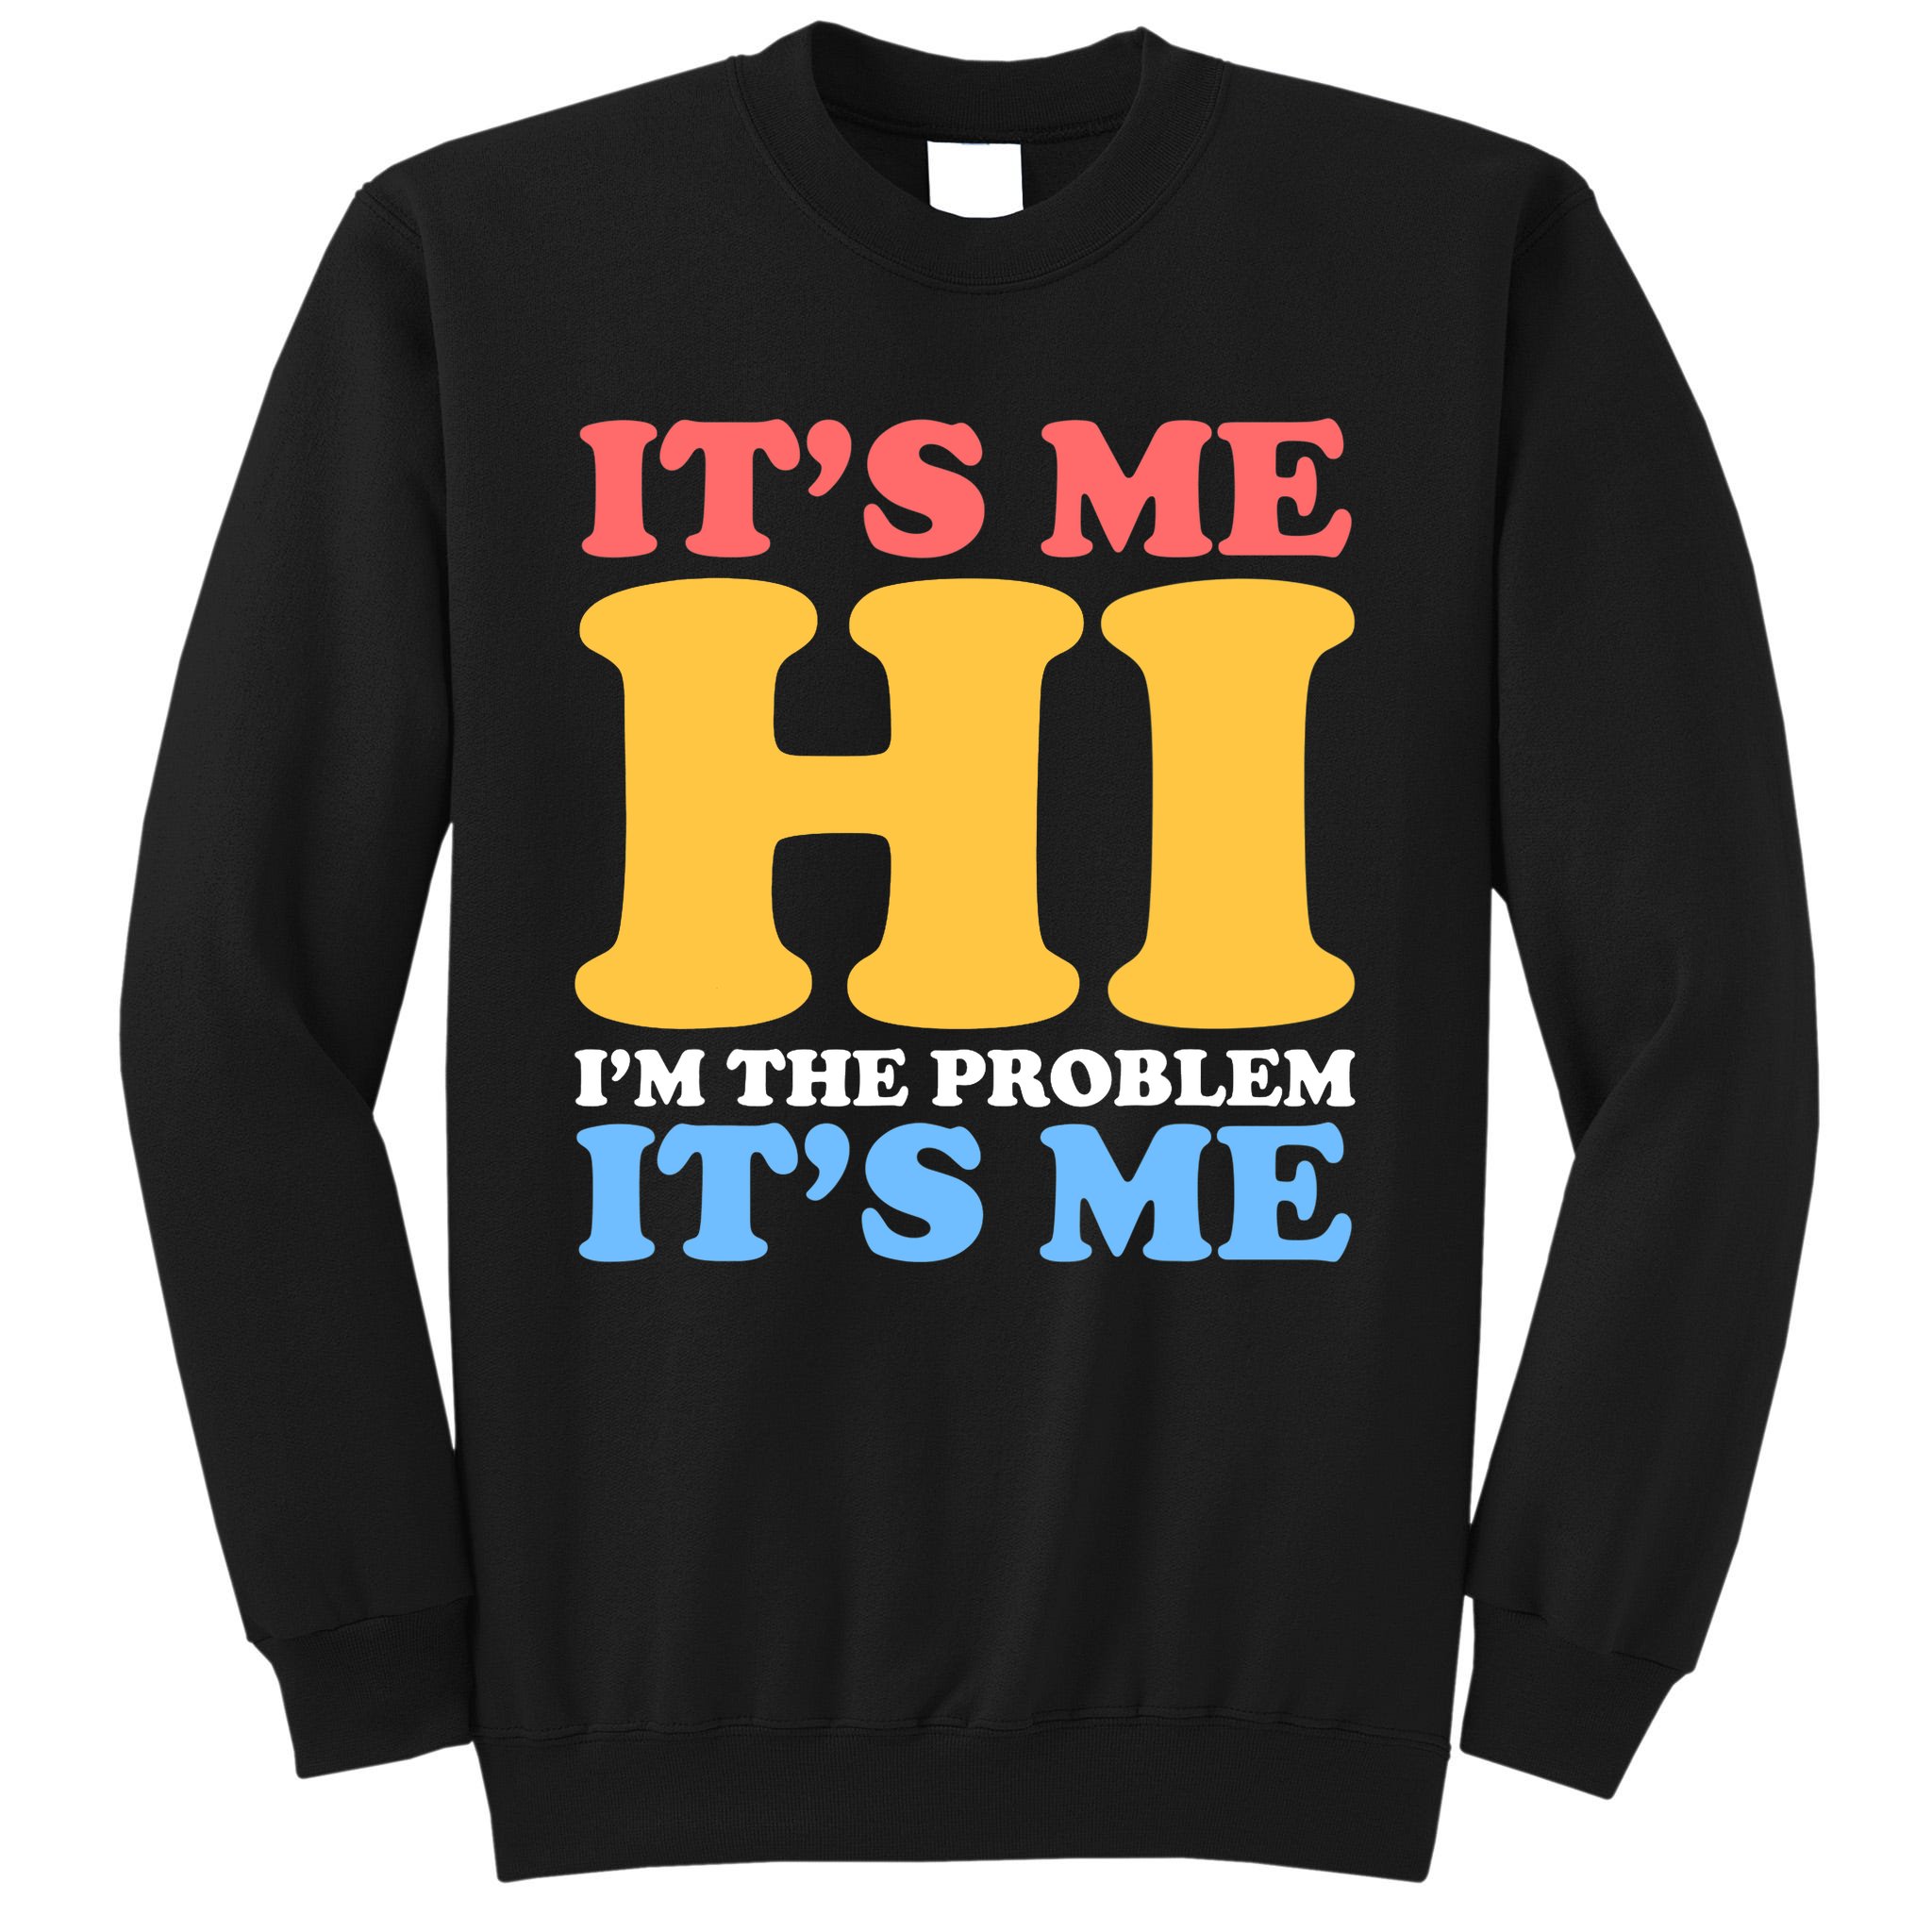 It's Me, Hi, I'm The Problem It's Me Funny Vintage Sweatshirt